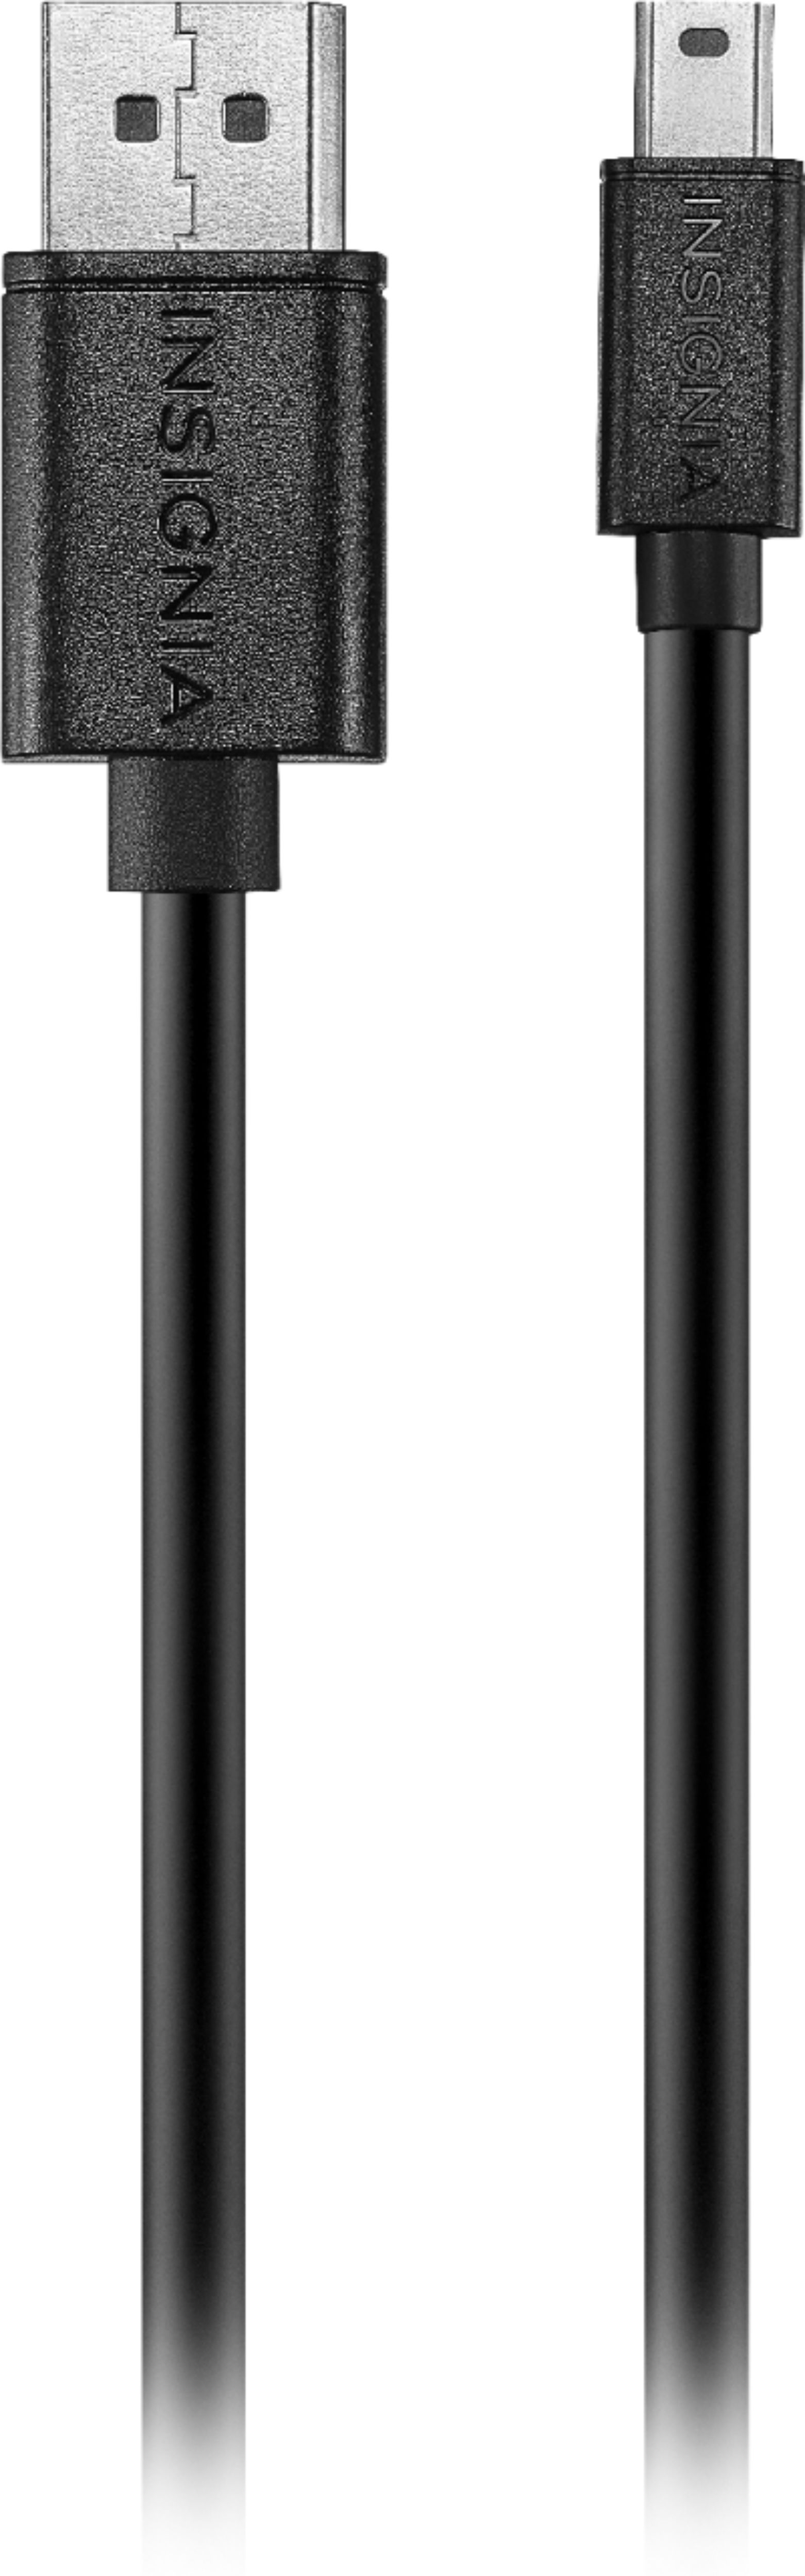 Best Buy: Insignia™ 6' Mini DisplayPort to DisplayPort Cable Black NS-PMD608